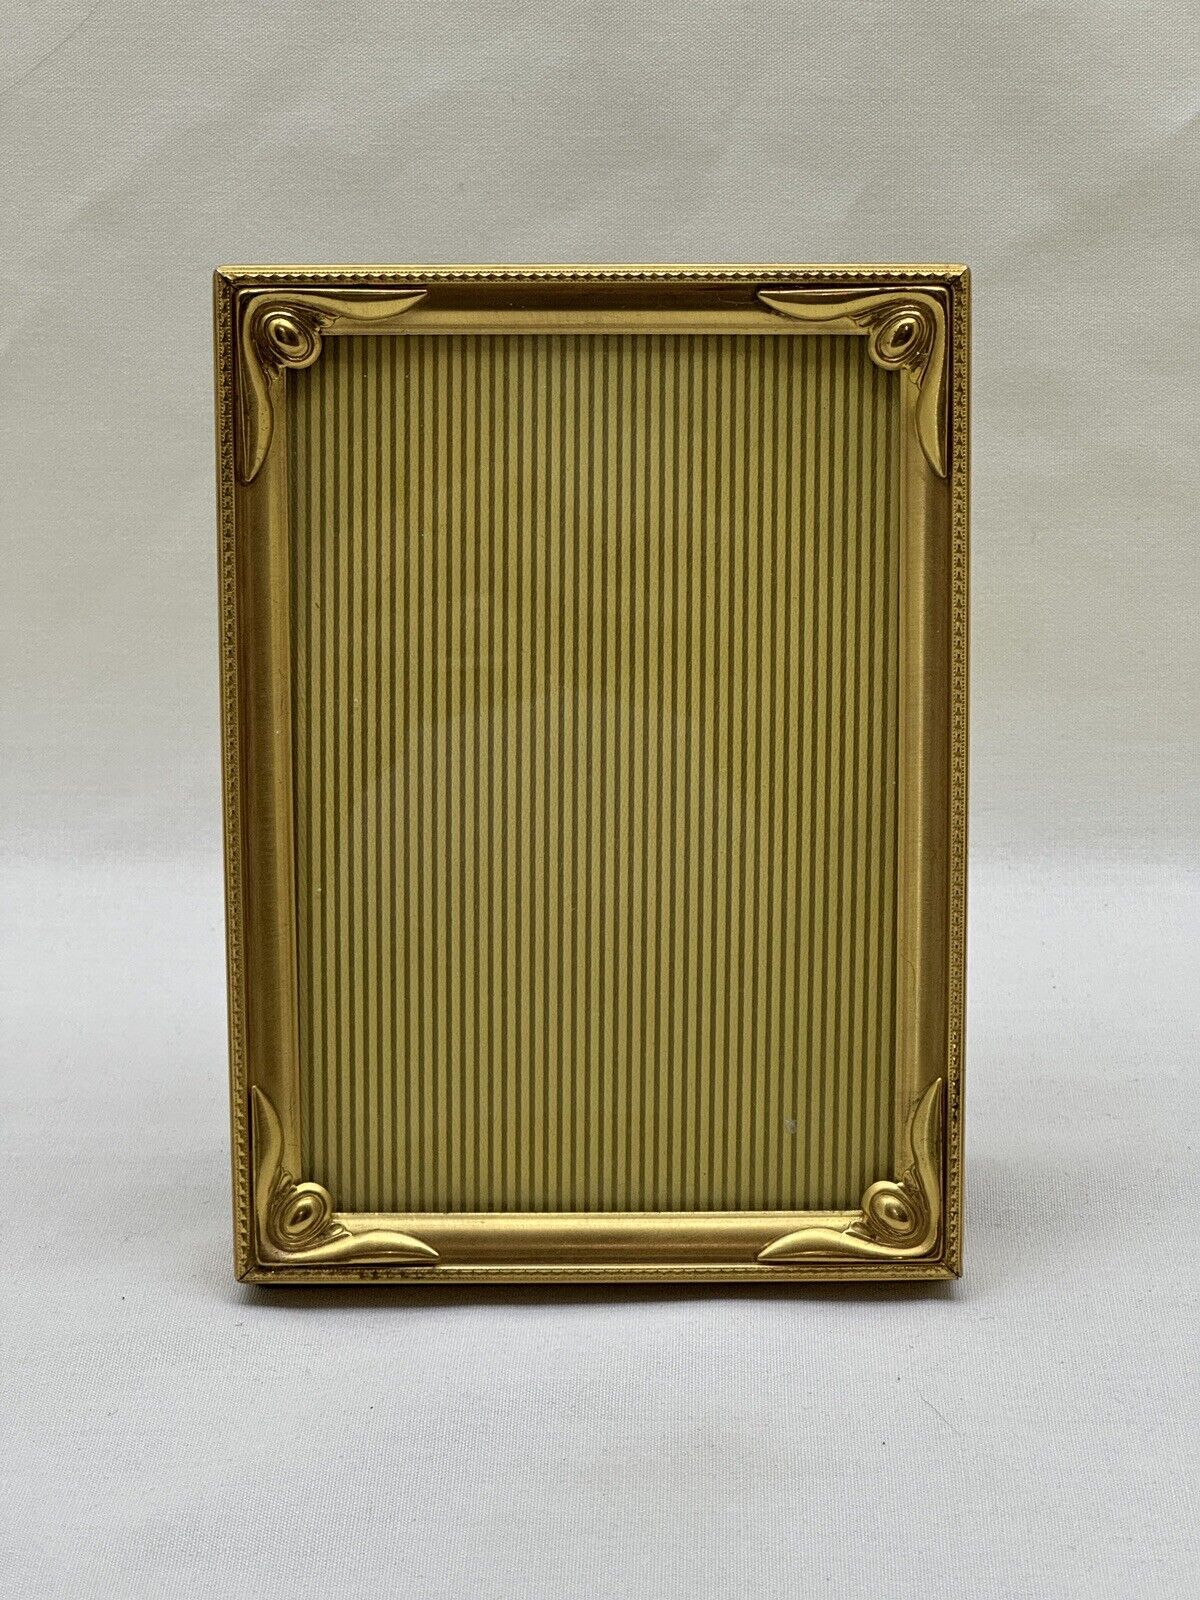 Vintage Ornate Brass Art Nouveau Gold Picture Frame 4x6 Easel Back Art Deco